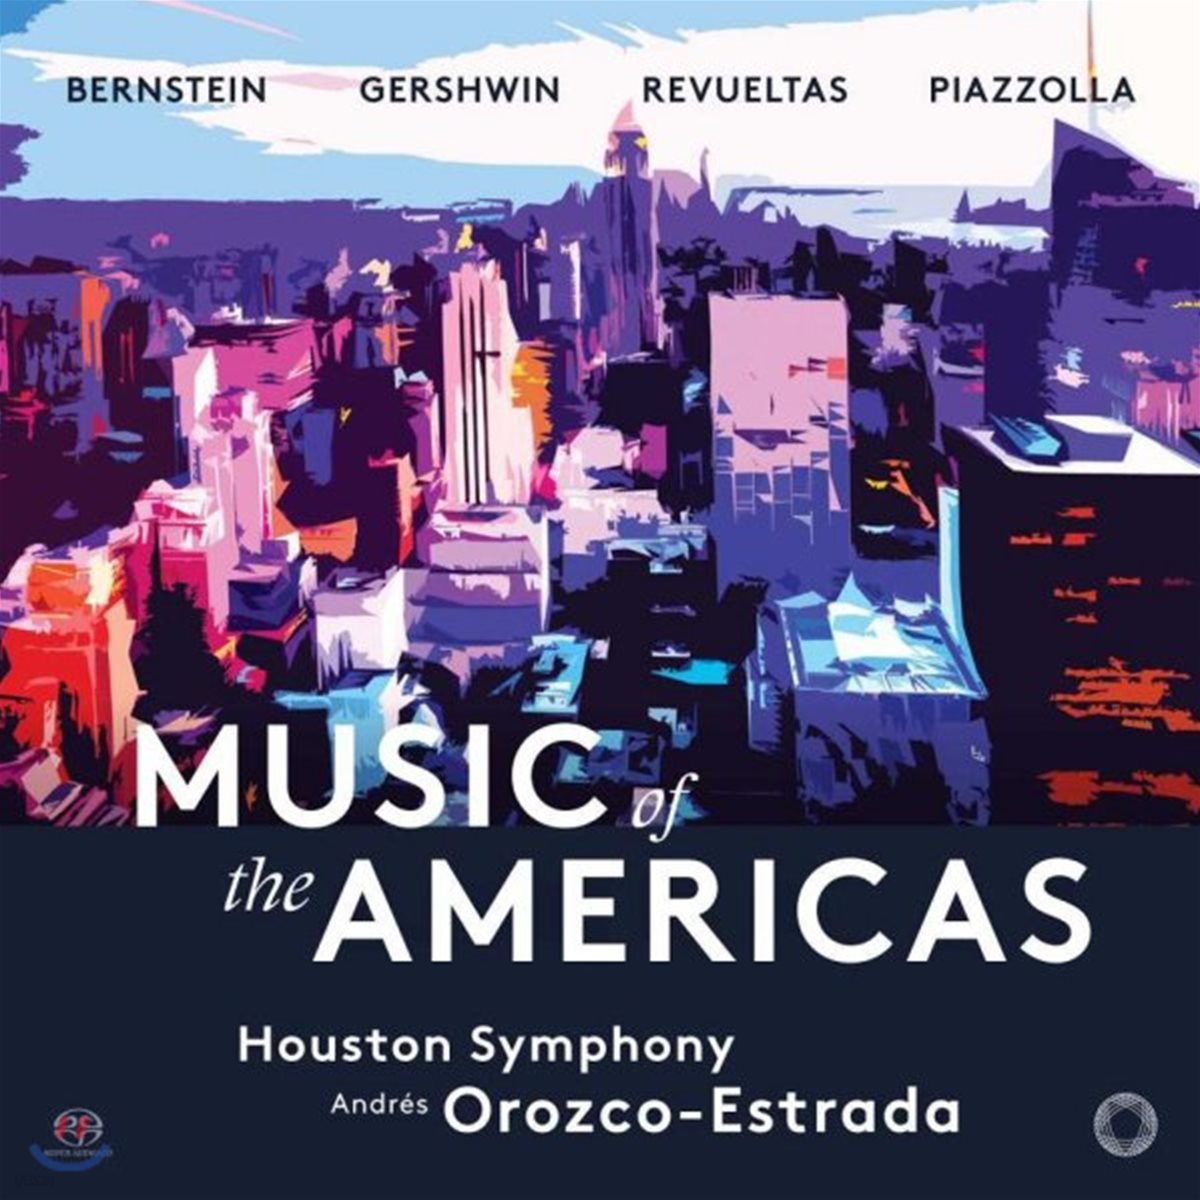 Andres Orozco-Estrada 뮤직 오브 아메리카 - 번스타인 / 피아졸라 / 거쉰 / 레부엘타스 (Music of the Americas)